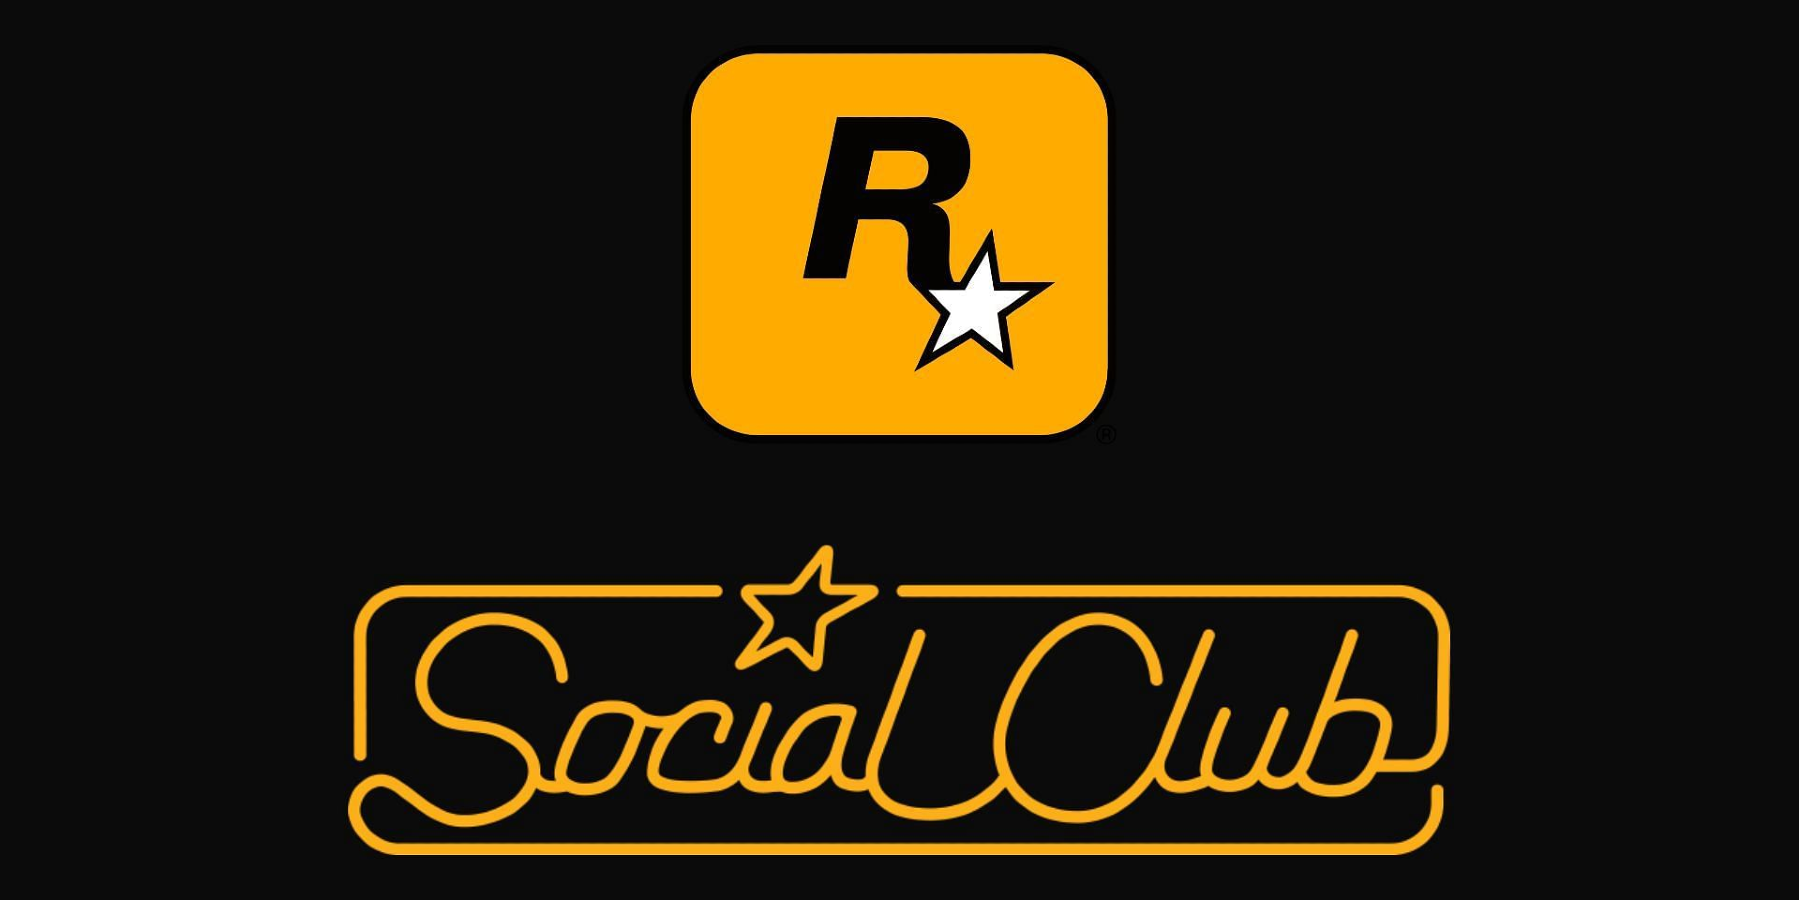 Introducing the All-New Rockstar Games Social Club